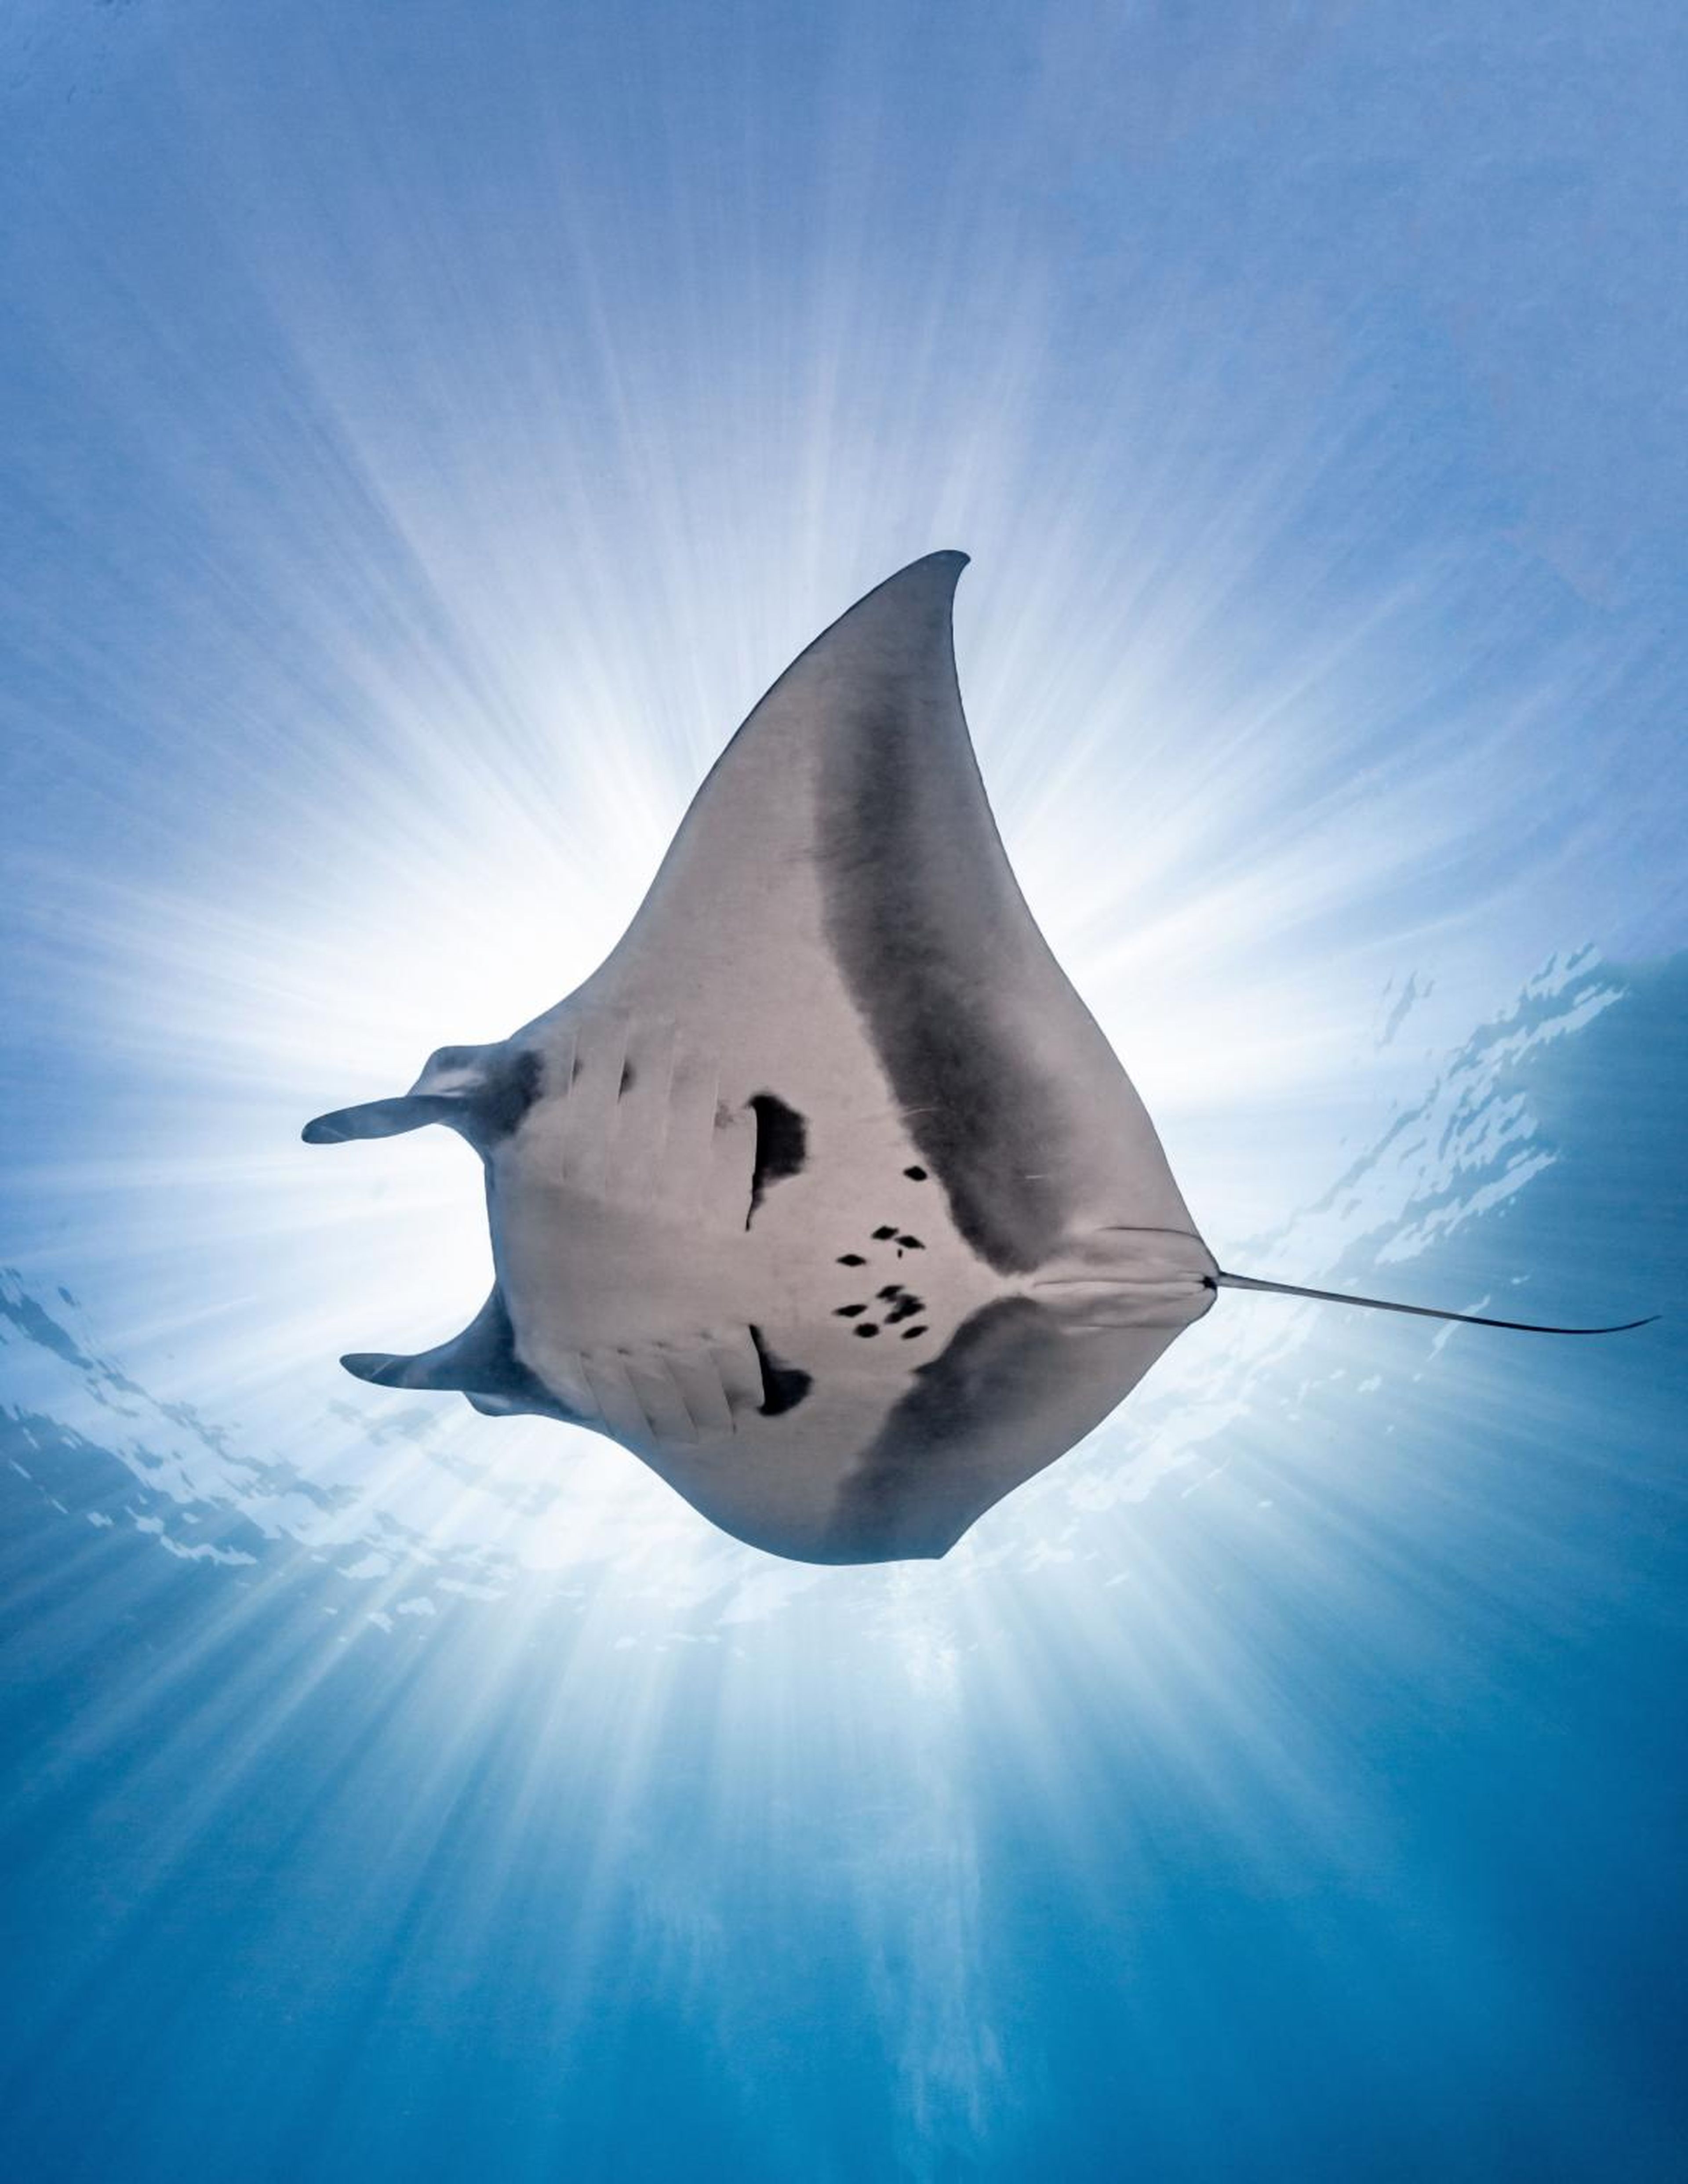 Australian photographer Nick Polanszky captured this manta ray as it swam through the Sea of Cortés near Mexico.